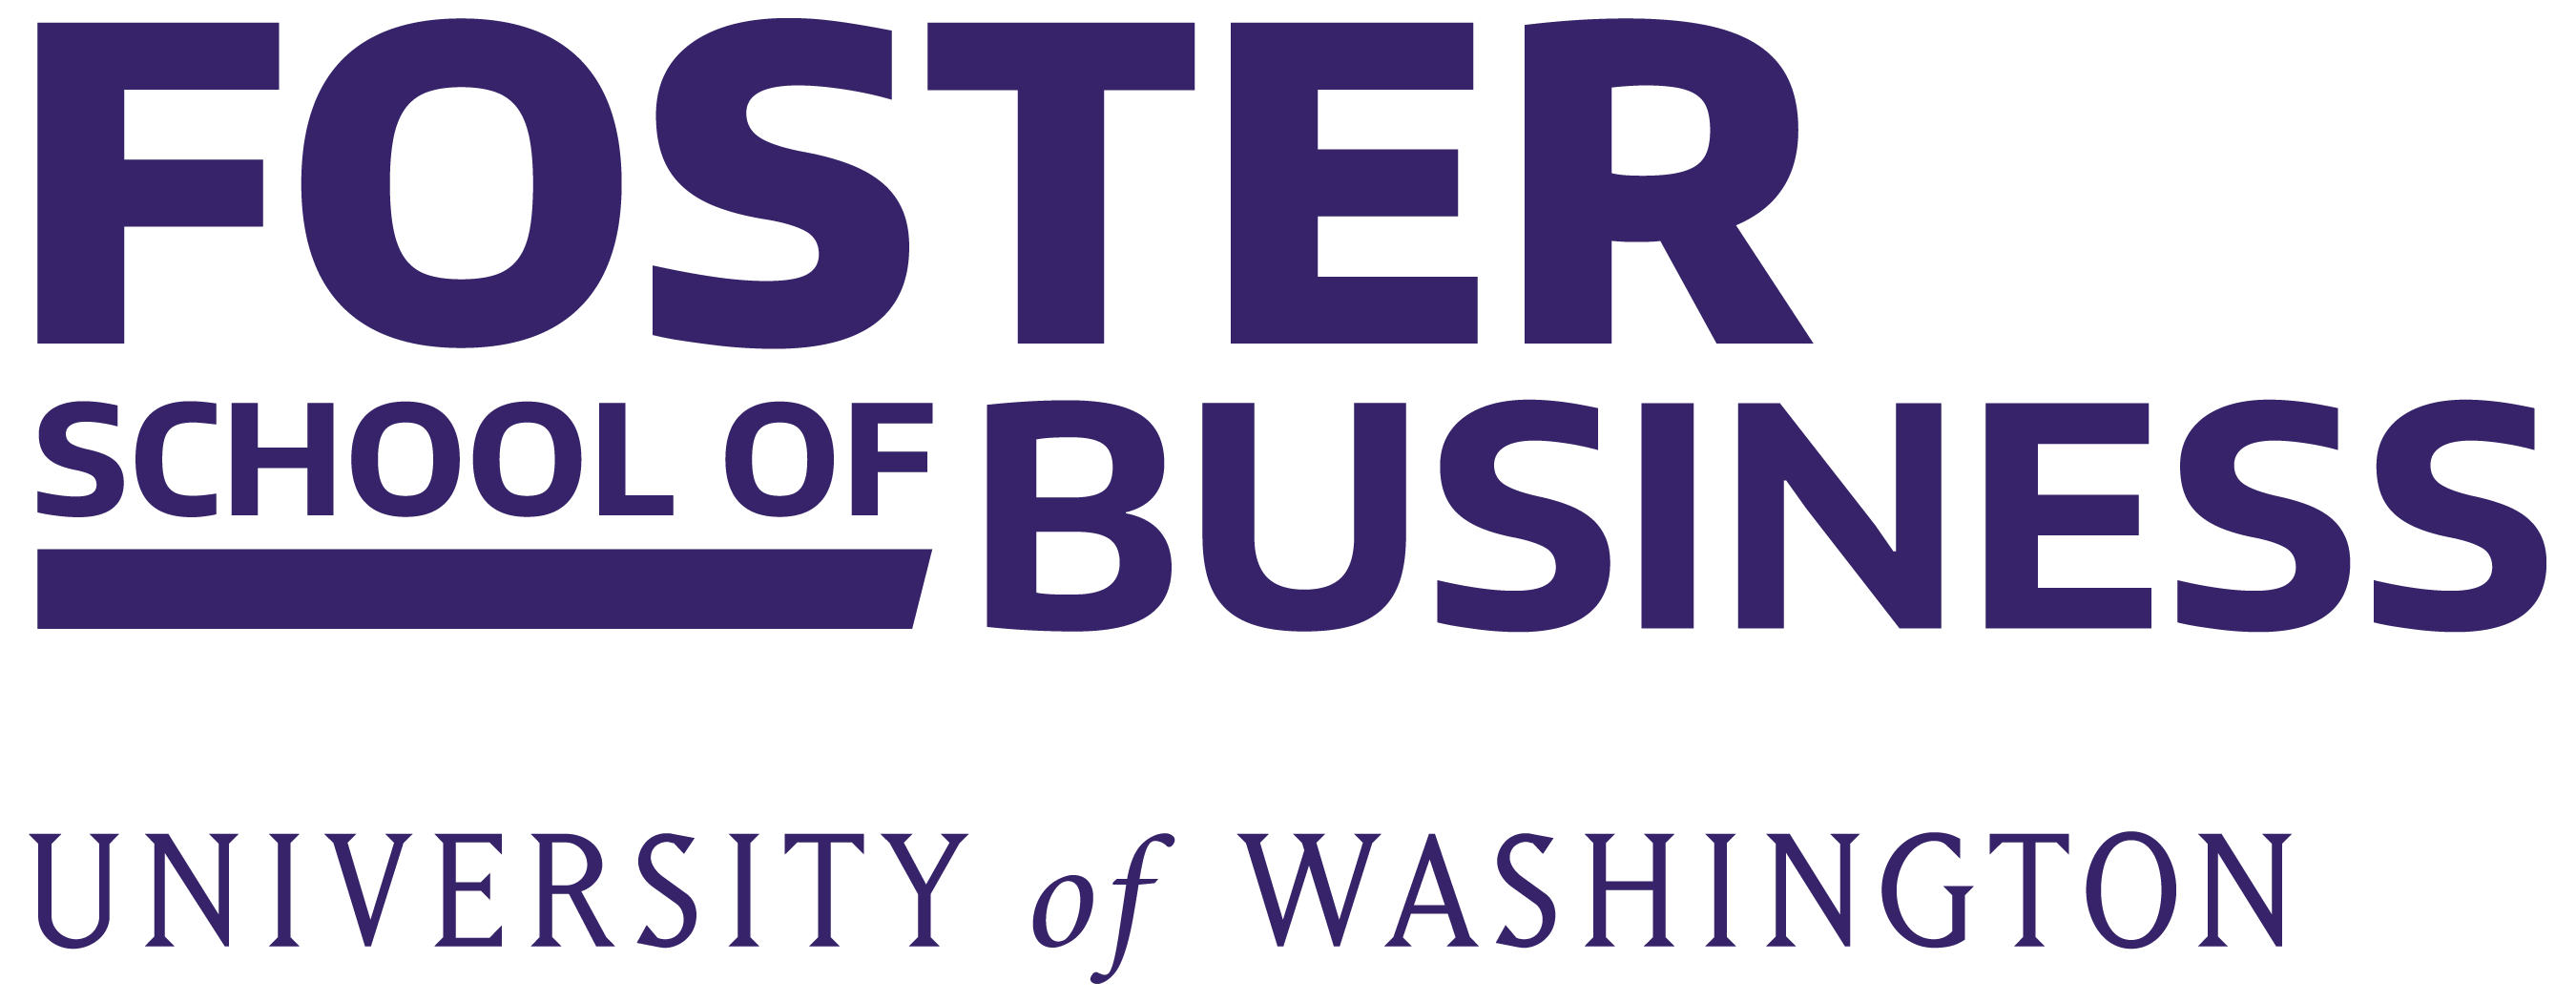 Foster_logo_UW_Purple